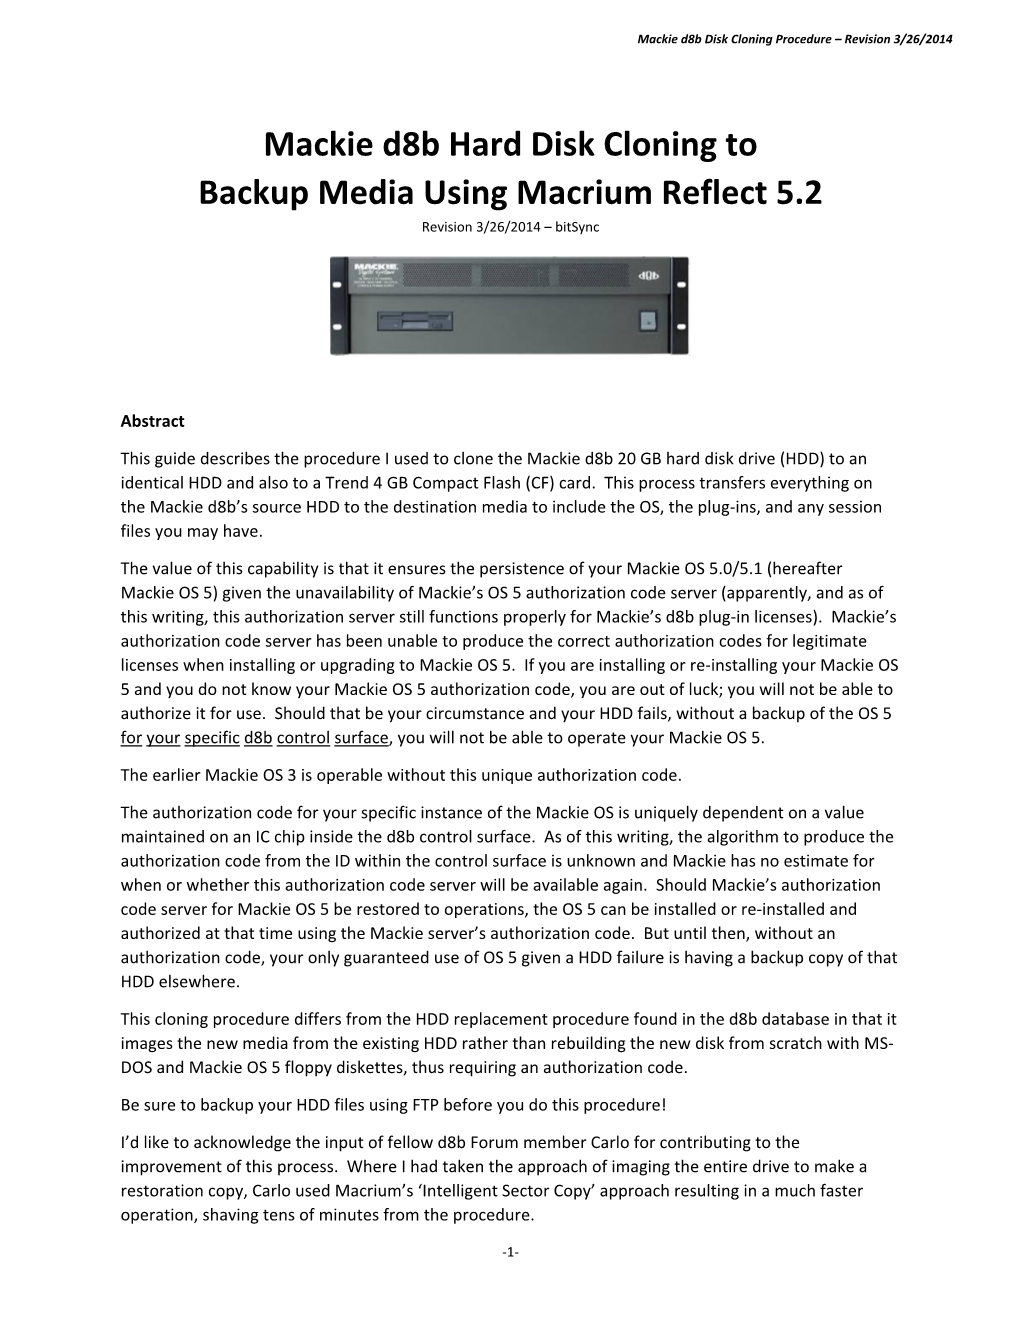 Mackie D8b Hard Disk Cloning to Backup Media Using Macrium Reflect 5.2 Revision 3/26/2014 – Bitsync